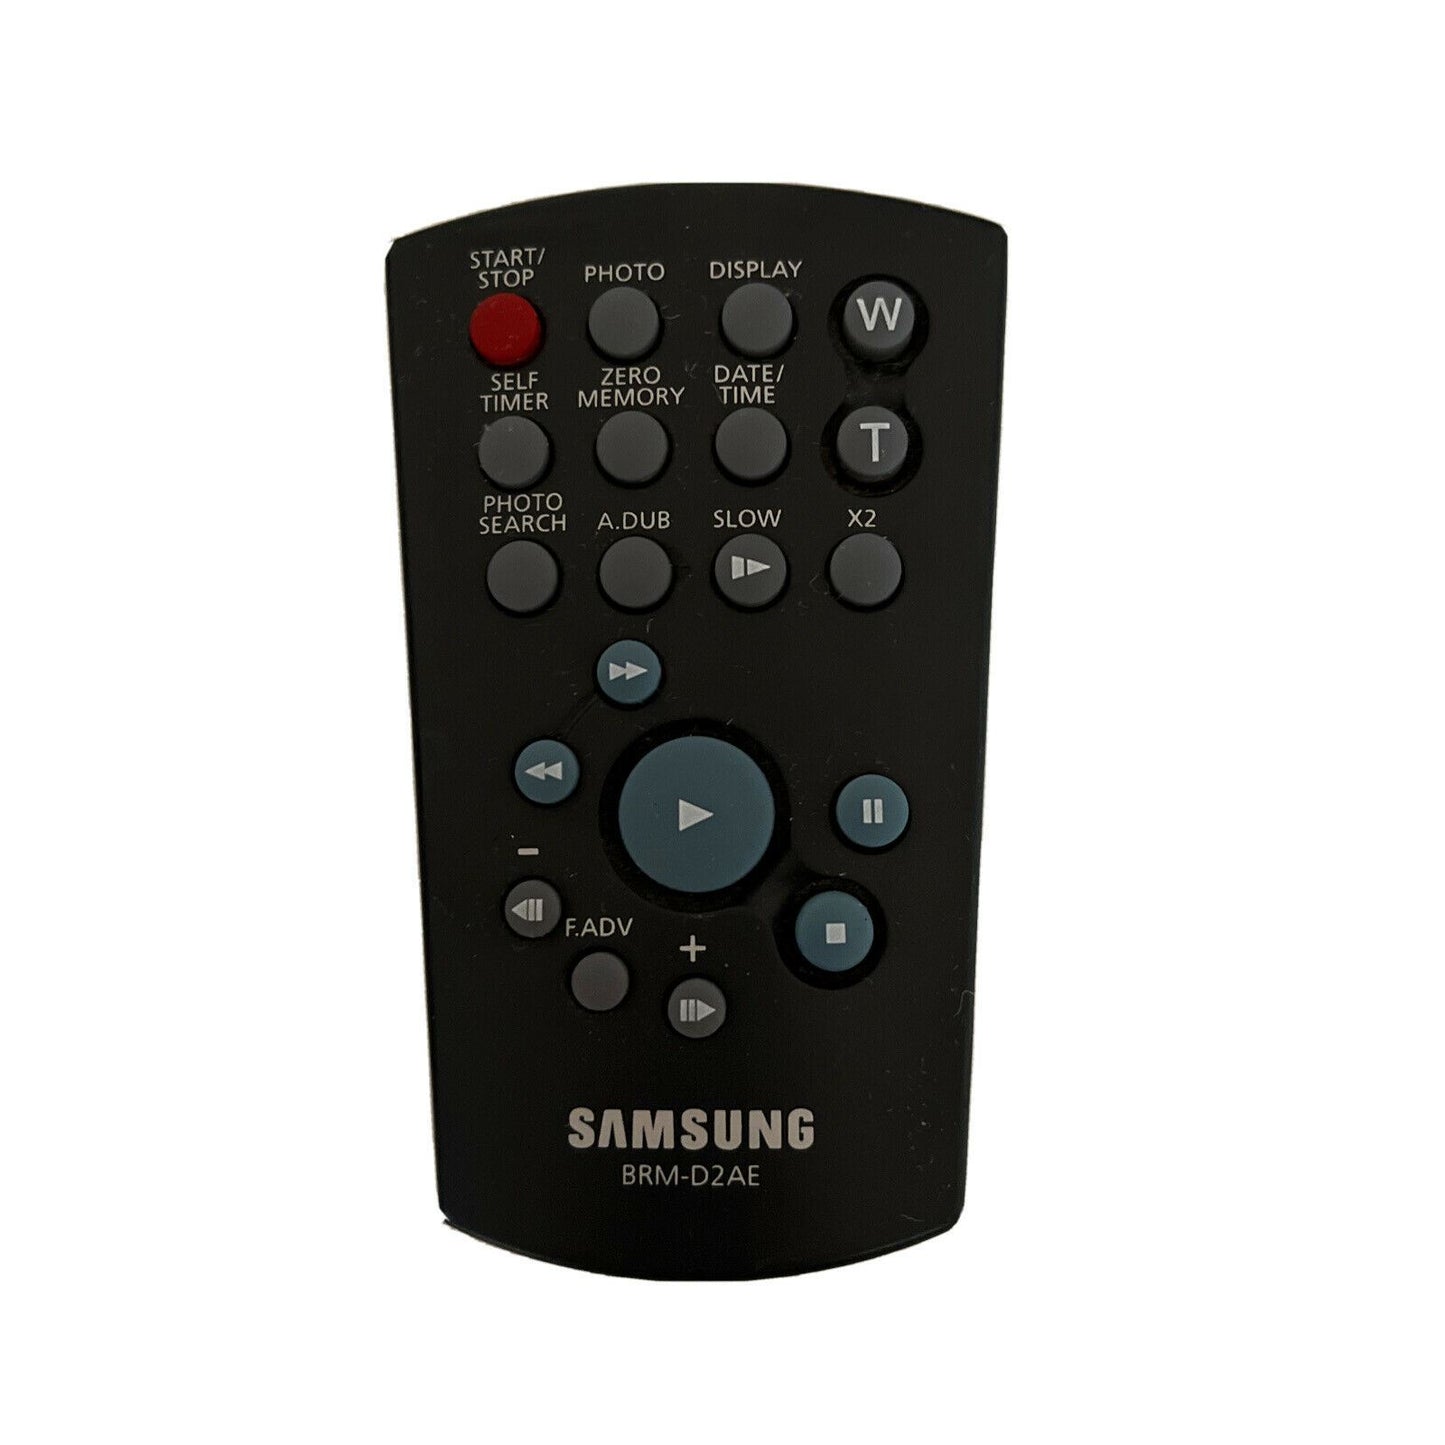 Genuine Samsung BRM-D2AE Remote Control for Samsung Camcorder